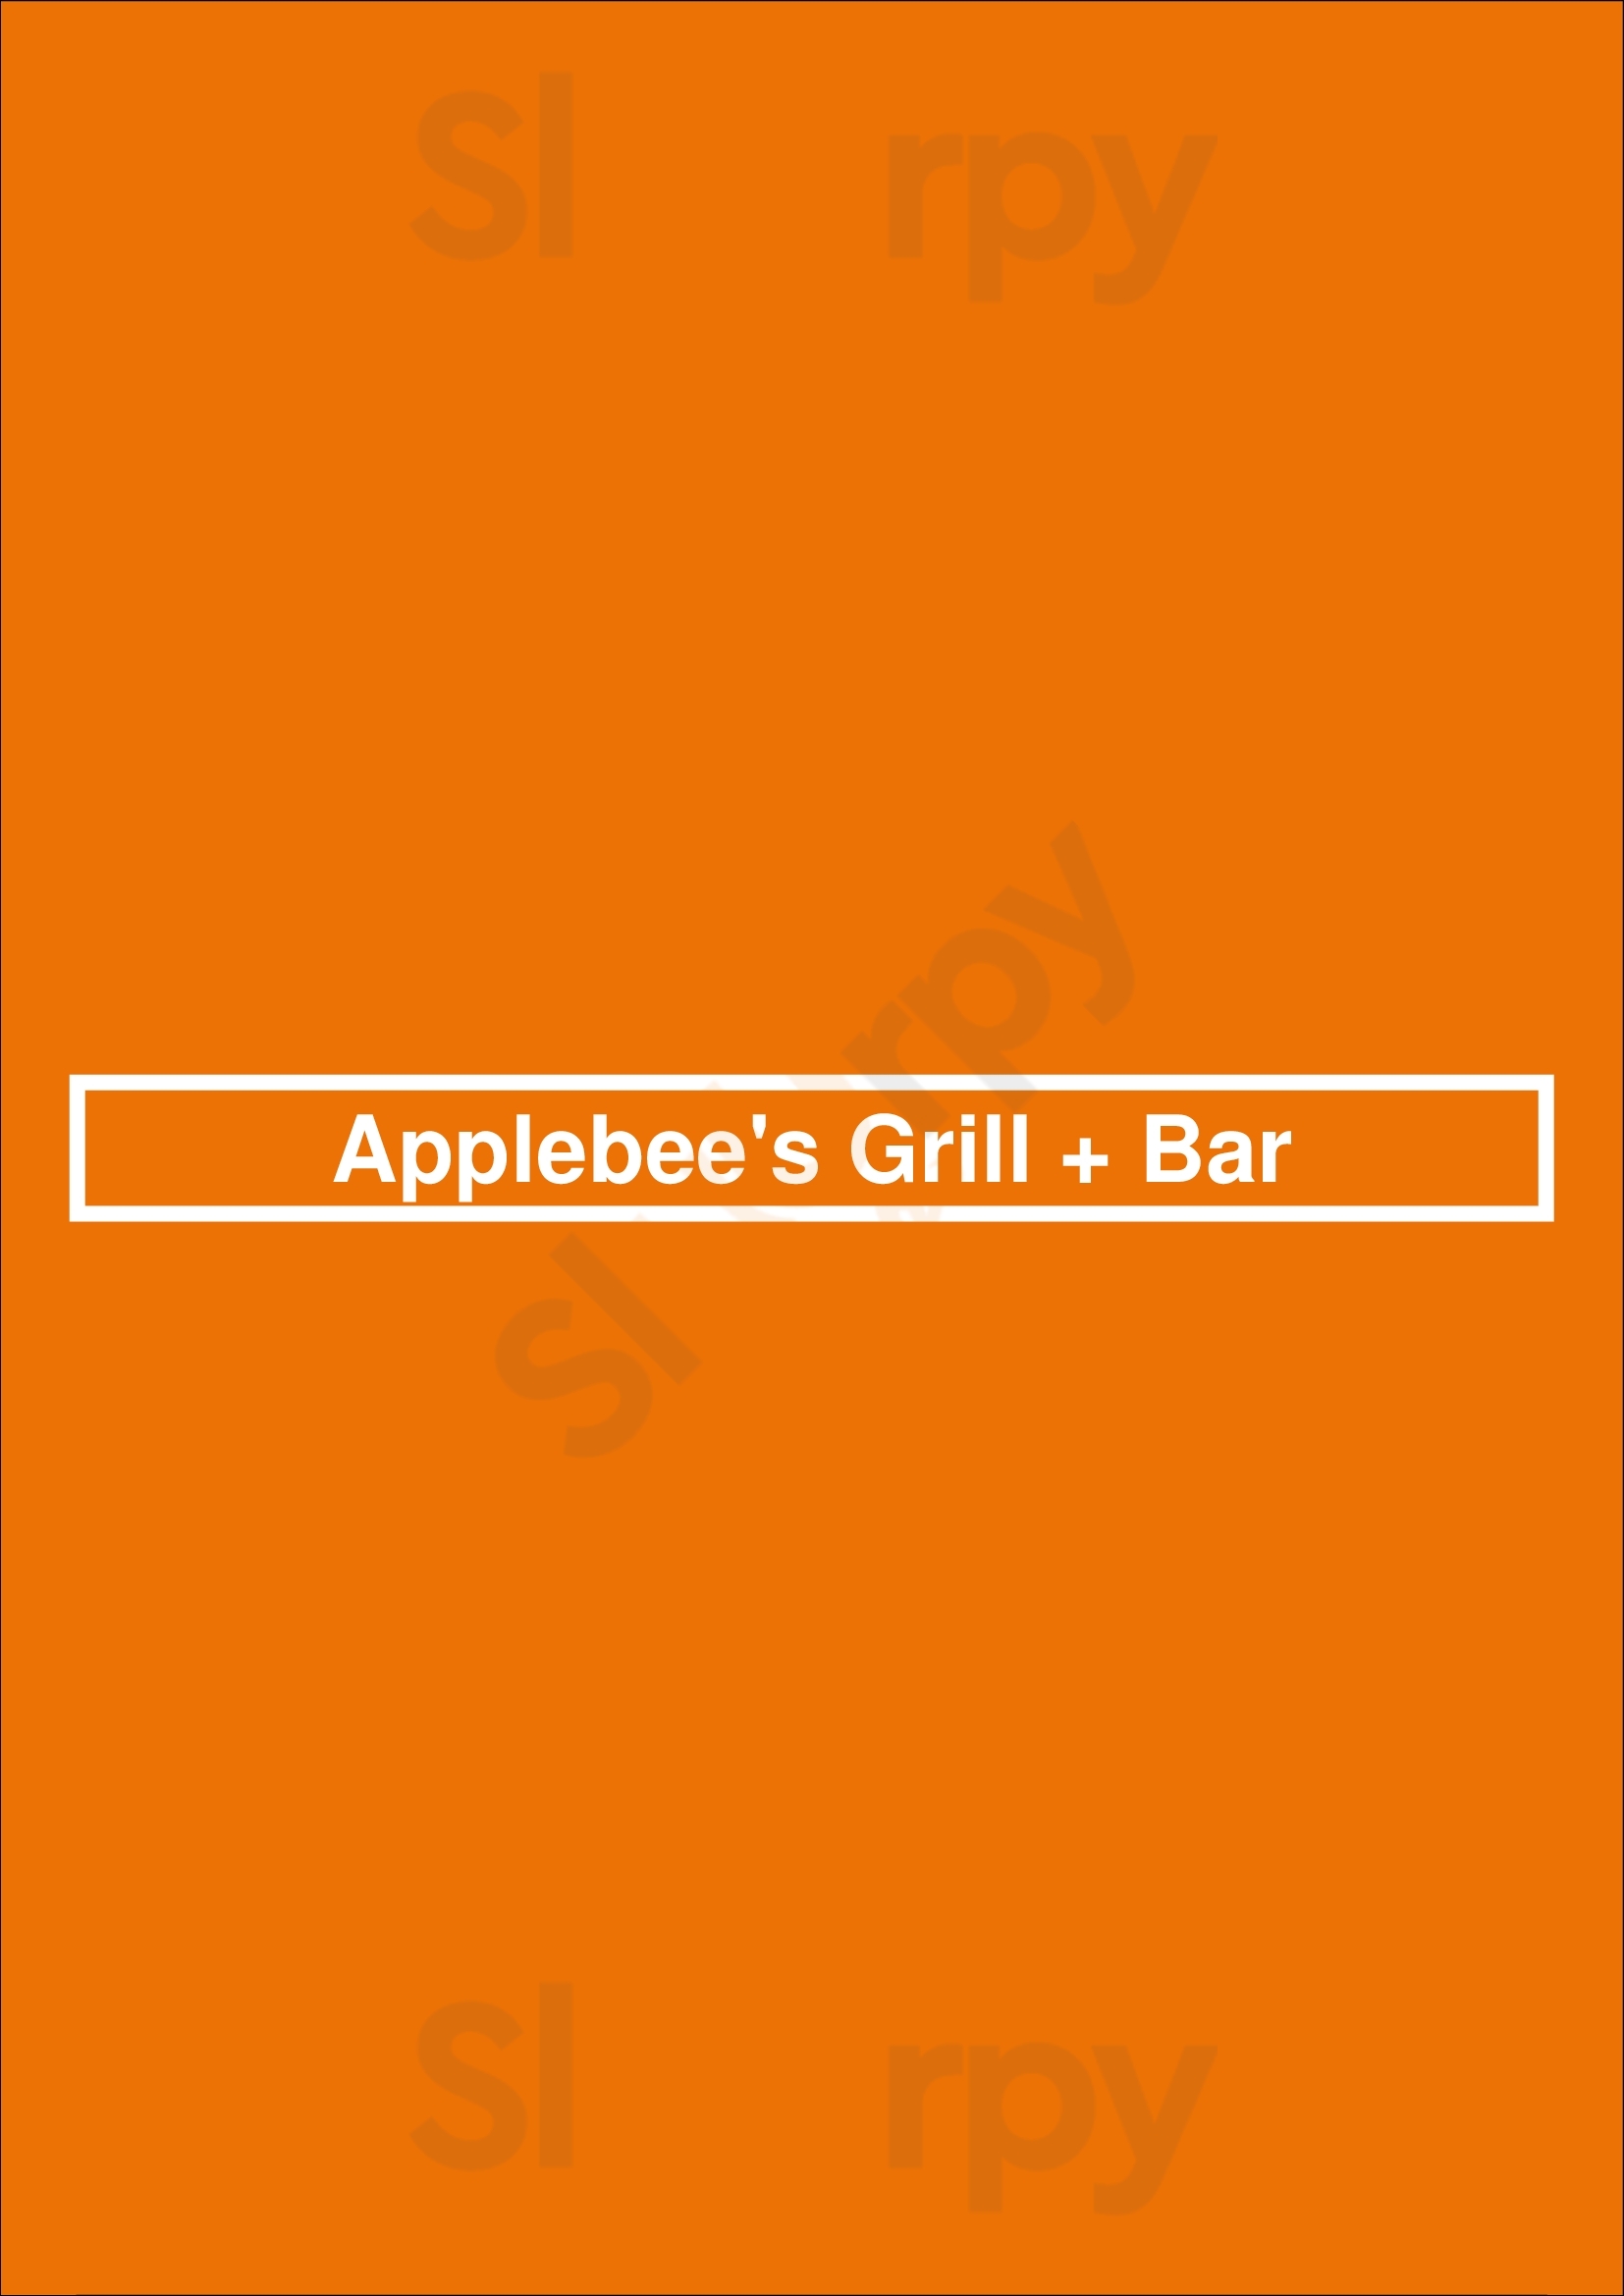 Applebee's Grill + Bar Jacksonville Menu - 1